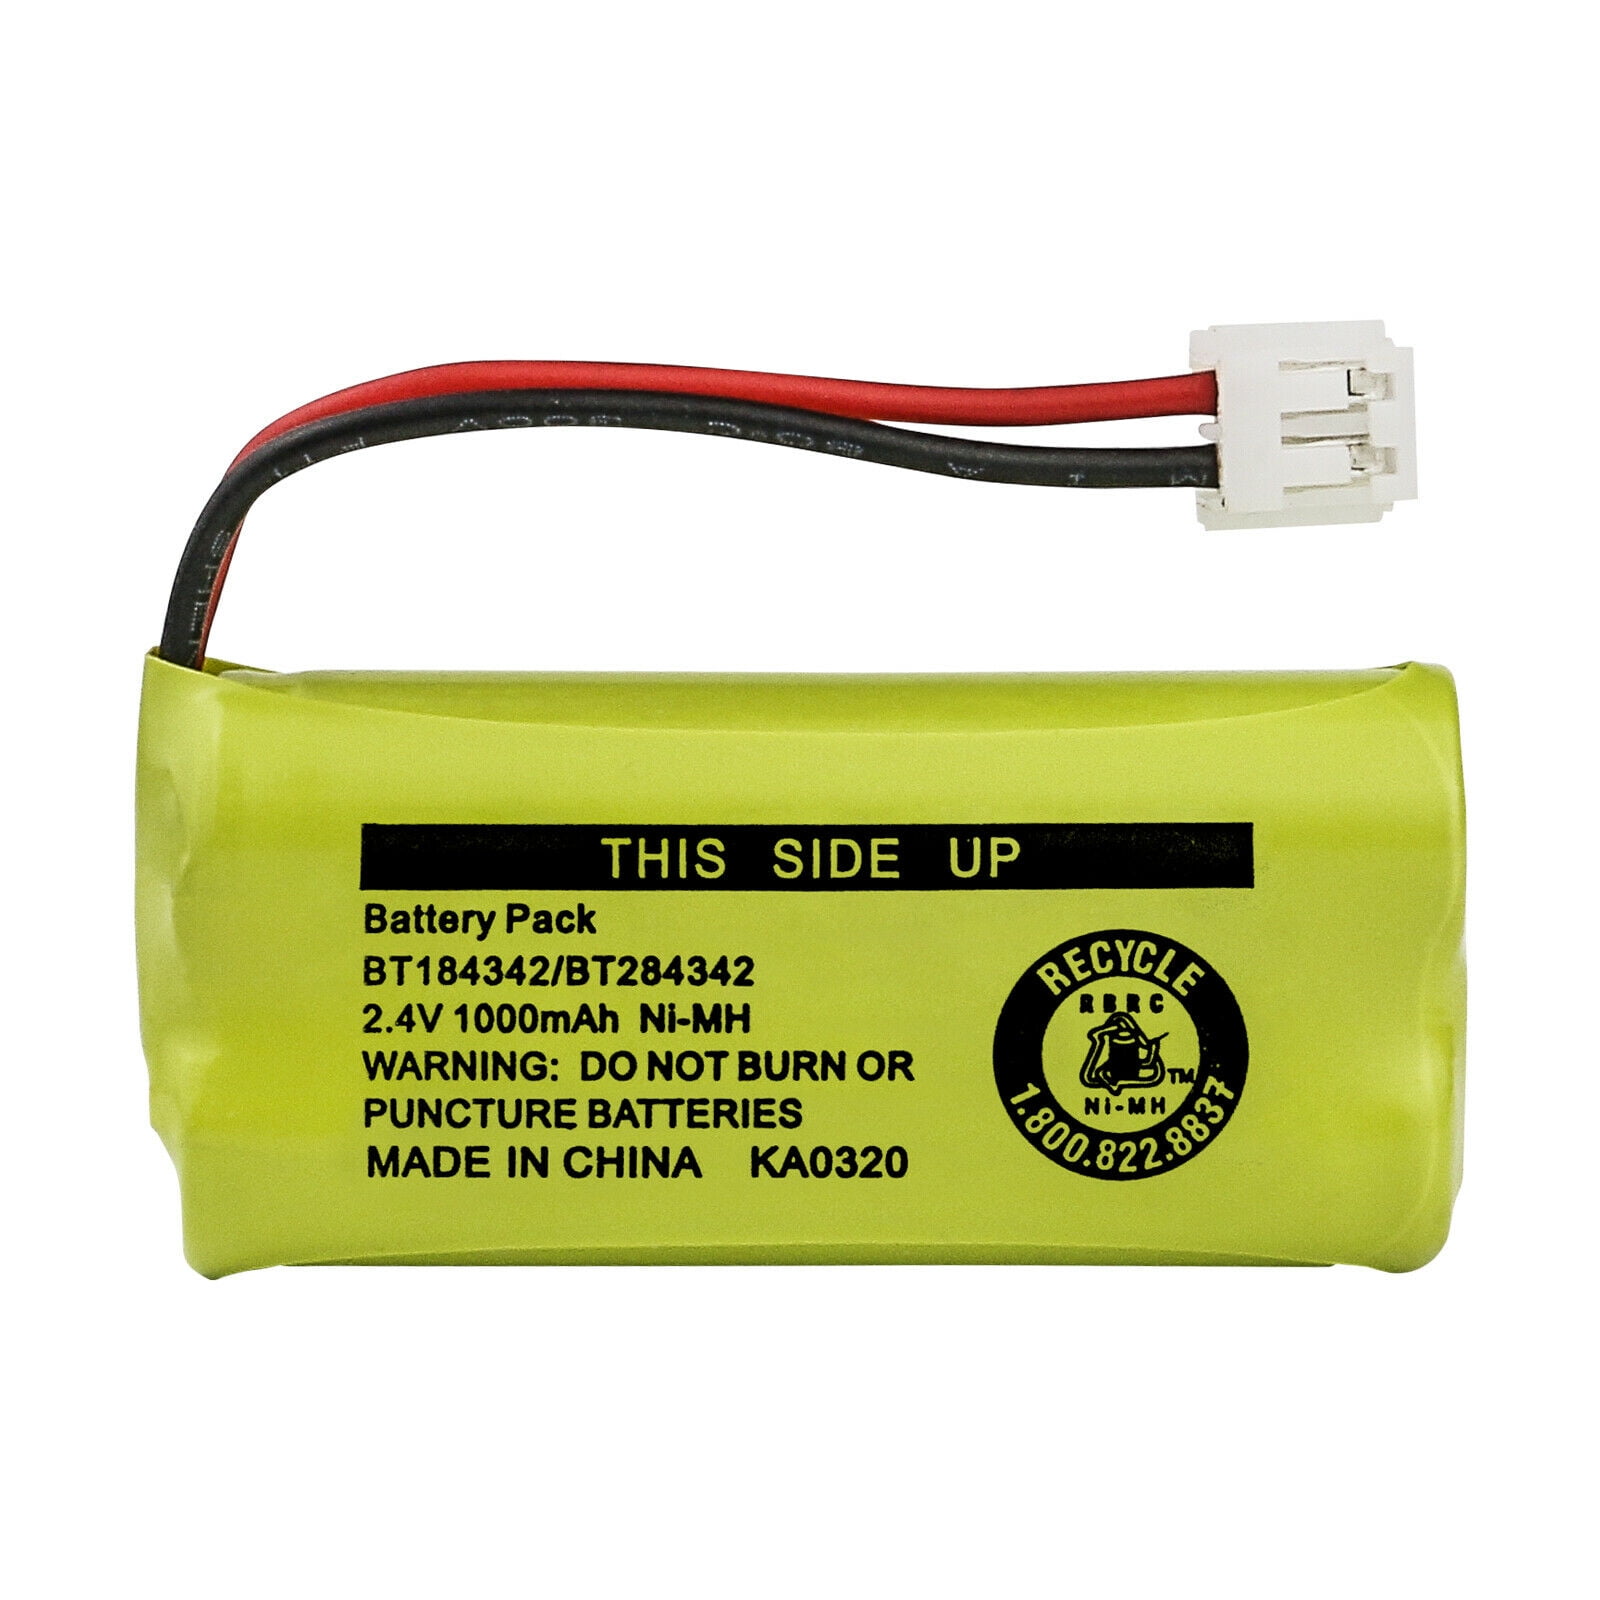 2x 800mah 2.4v battery for v tech ls62254/ls6225-4/ls62255 